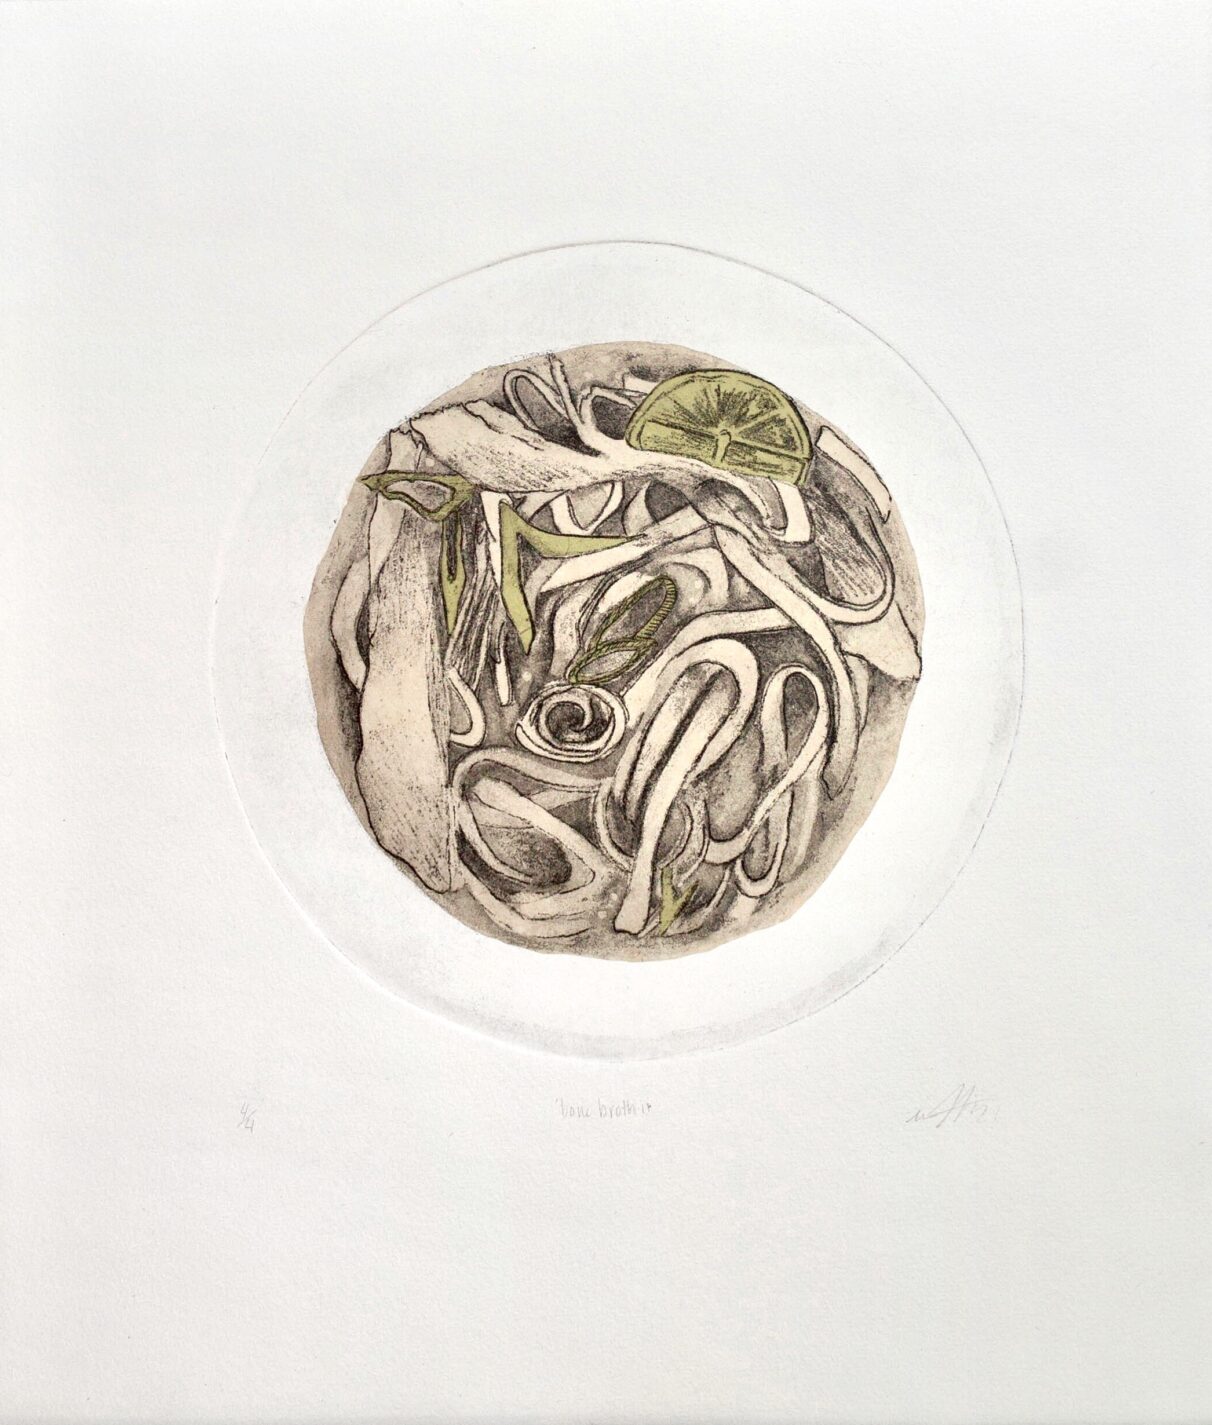 A print of a bowl of noodles.